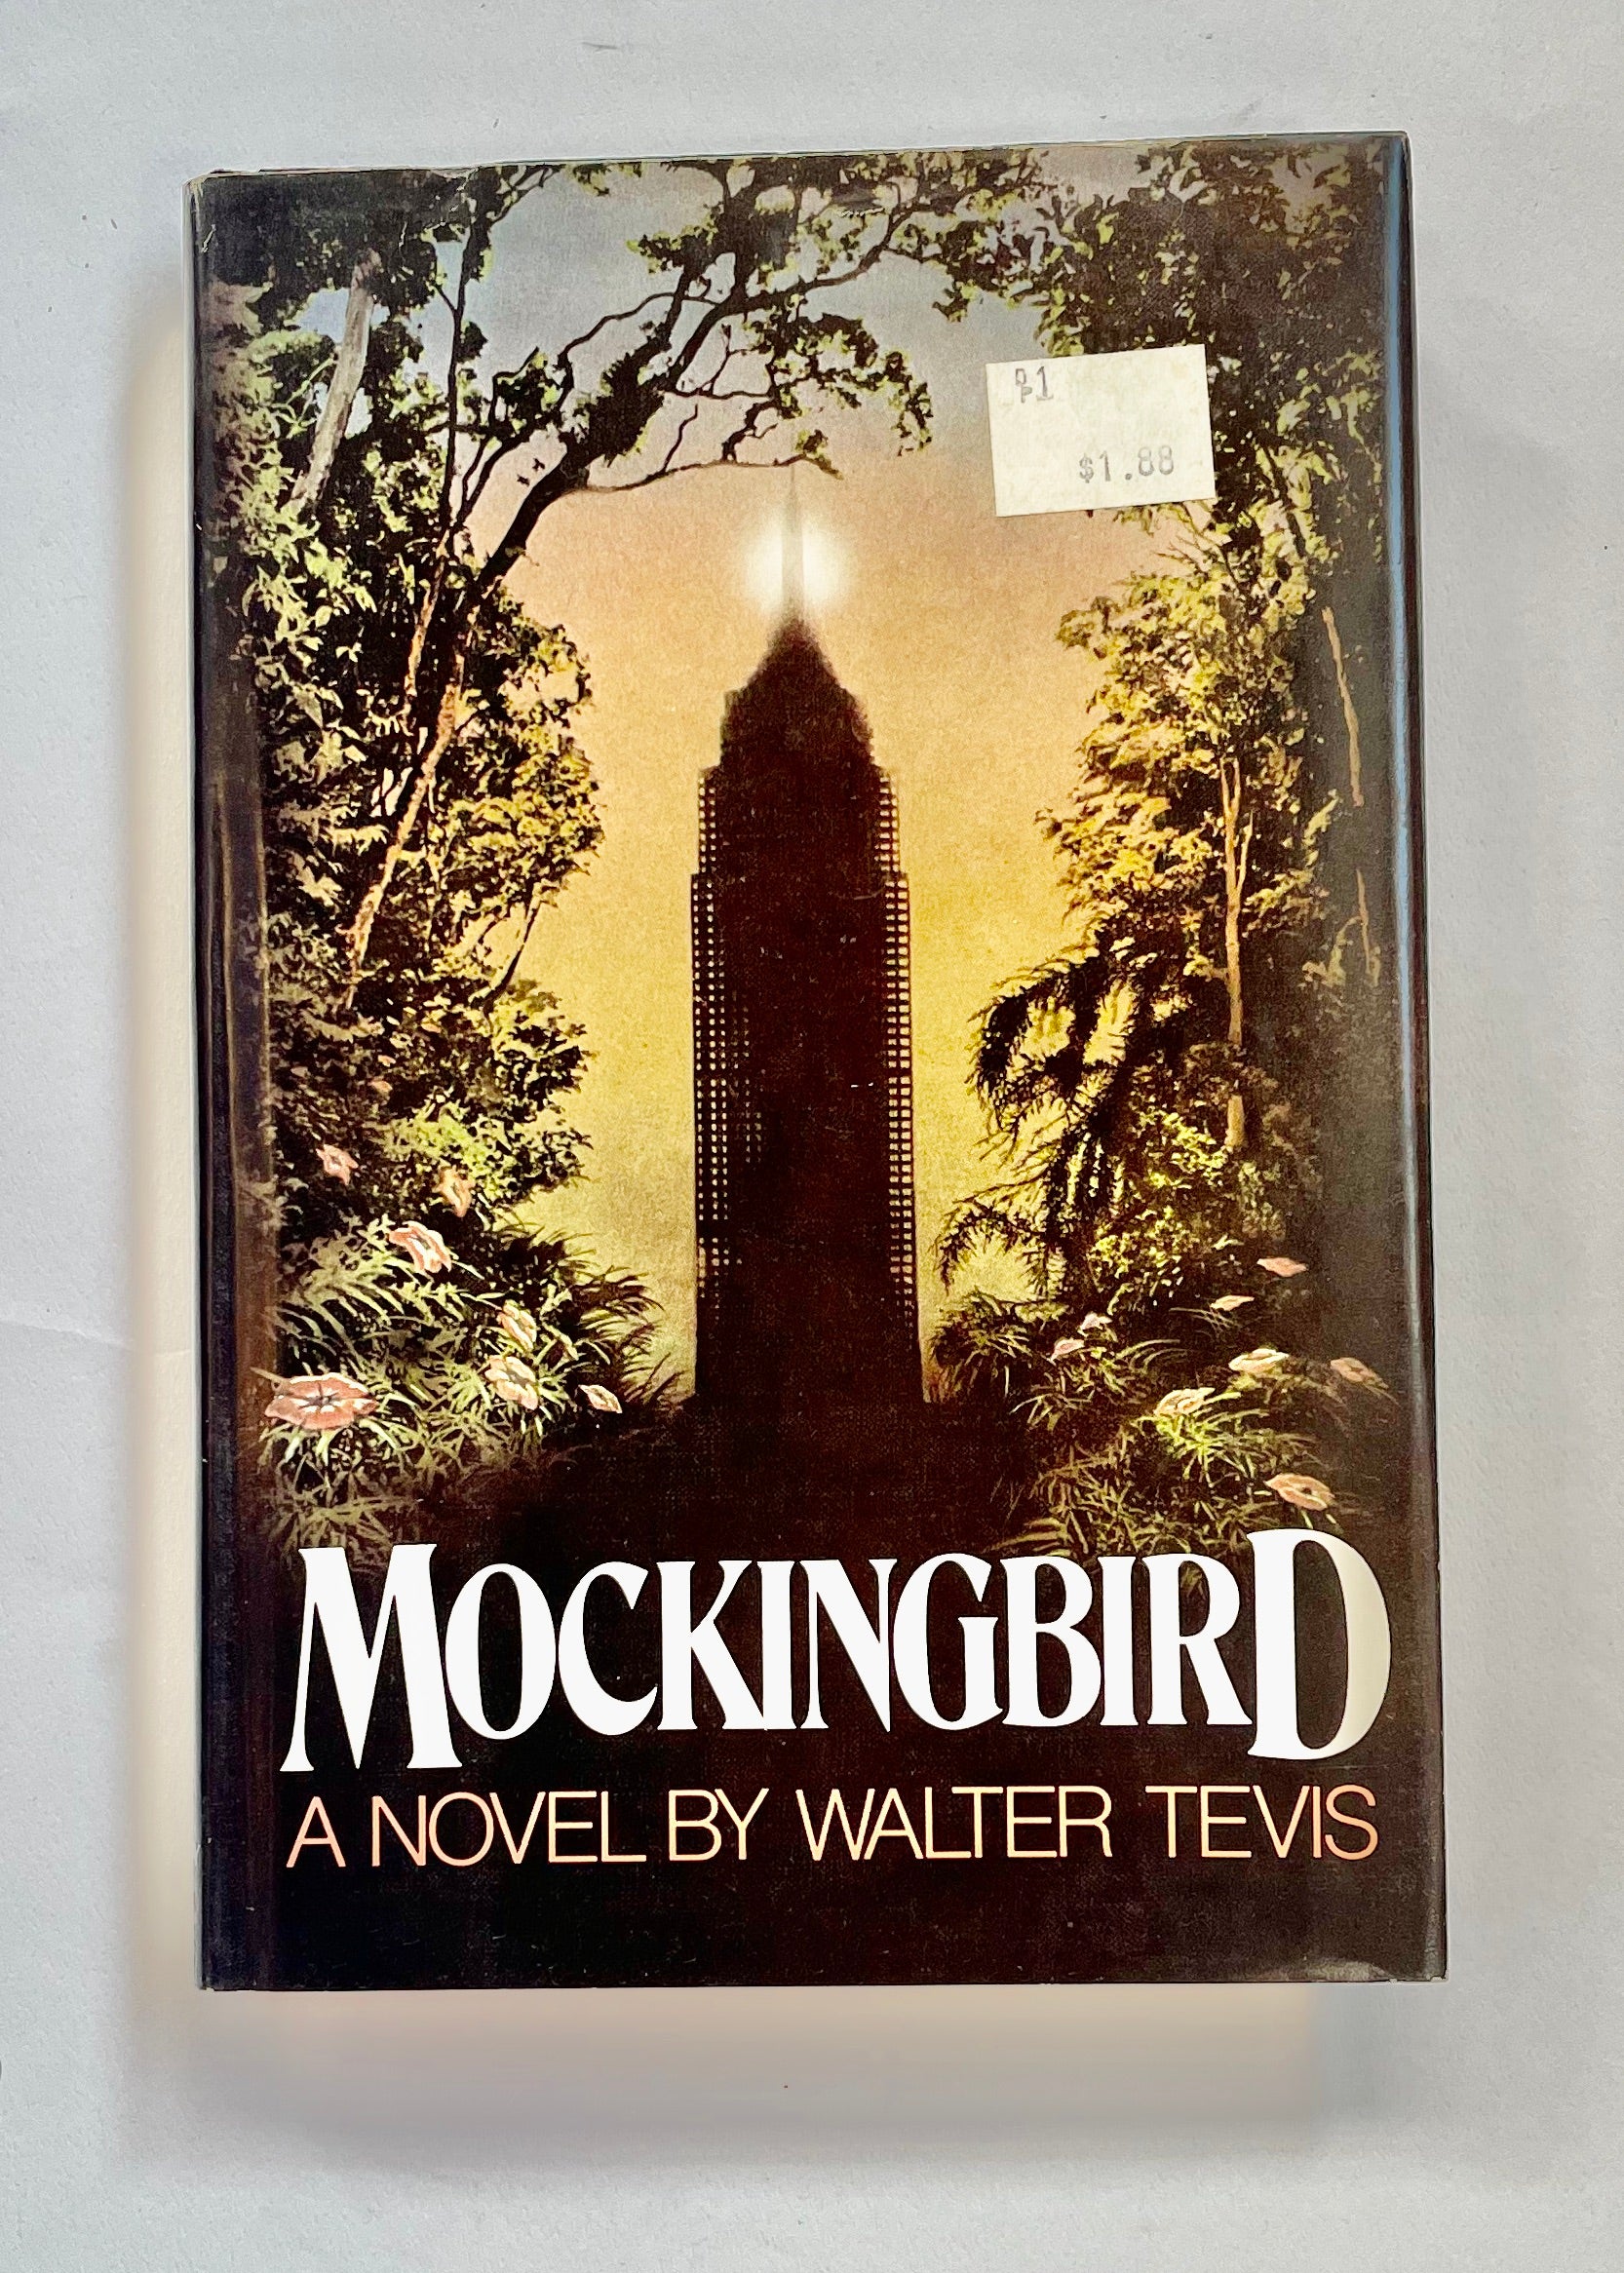 1980 "Mockingbird"a Novel by Walter Tevis